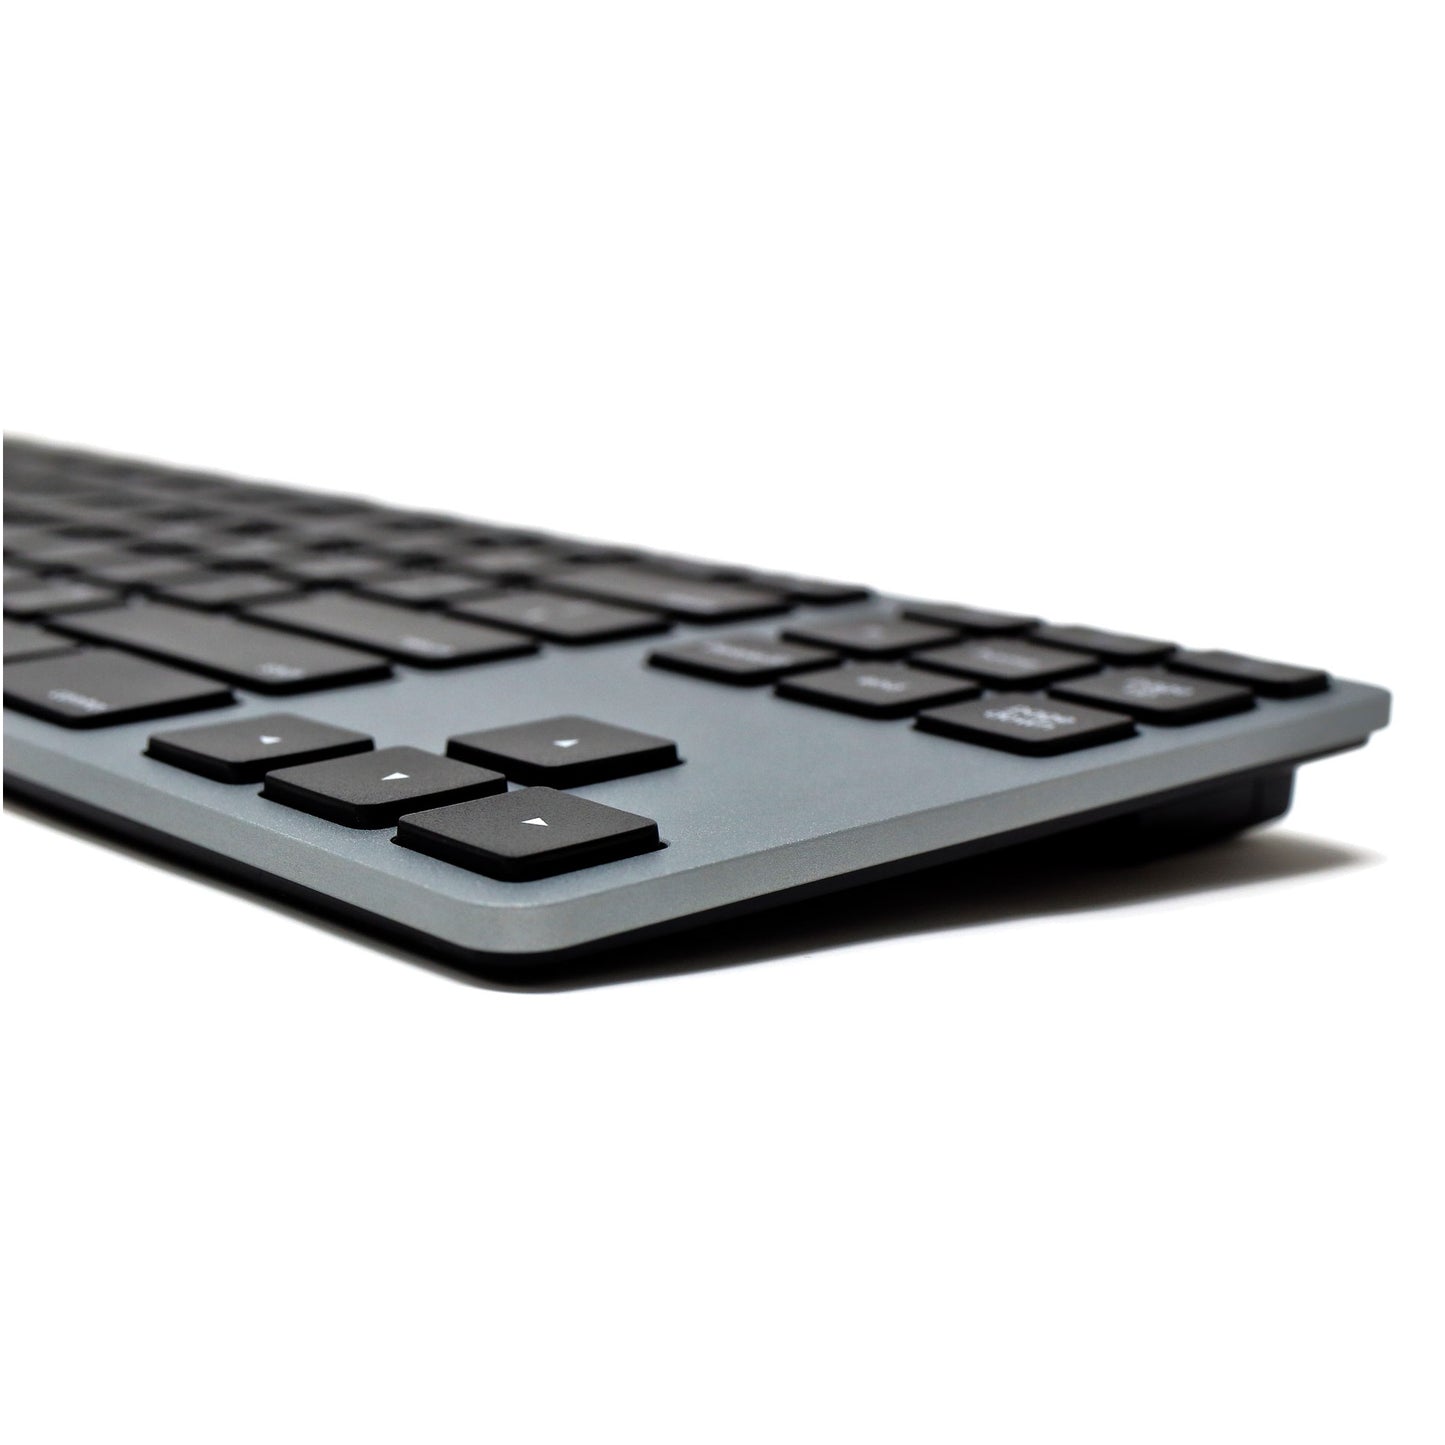 Matias Wired Aluminum Tenkeyless Keyboard for Mac